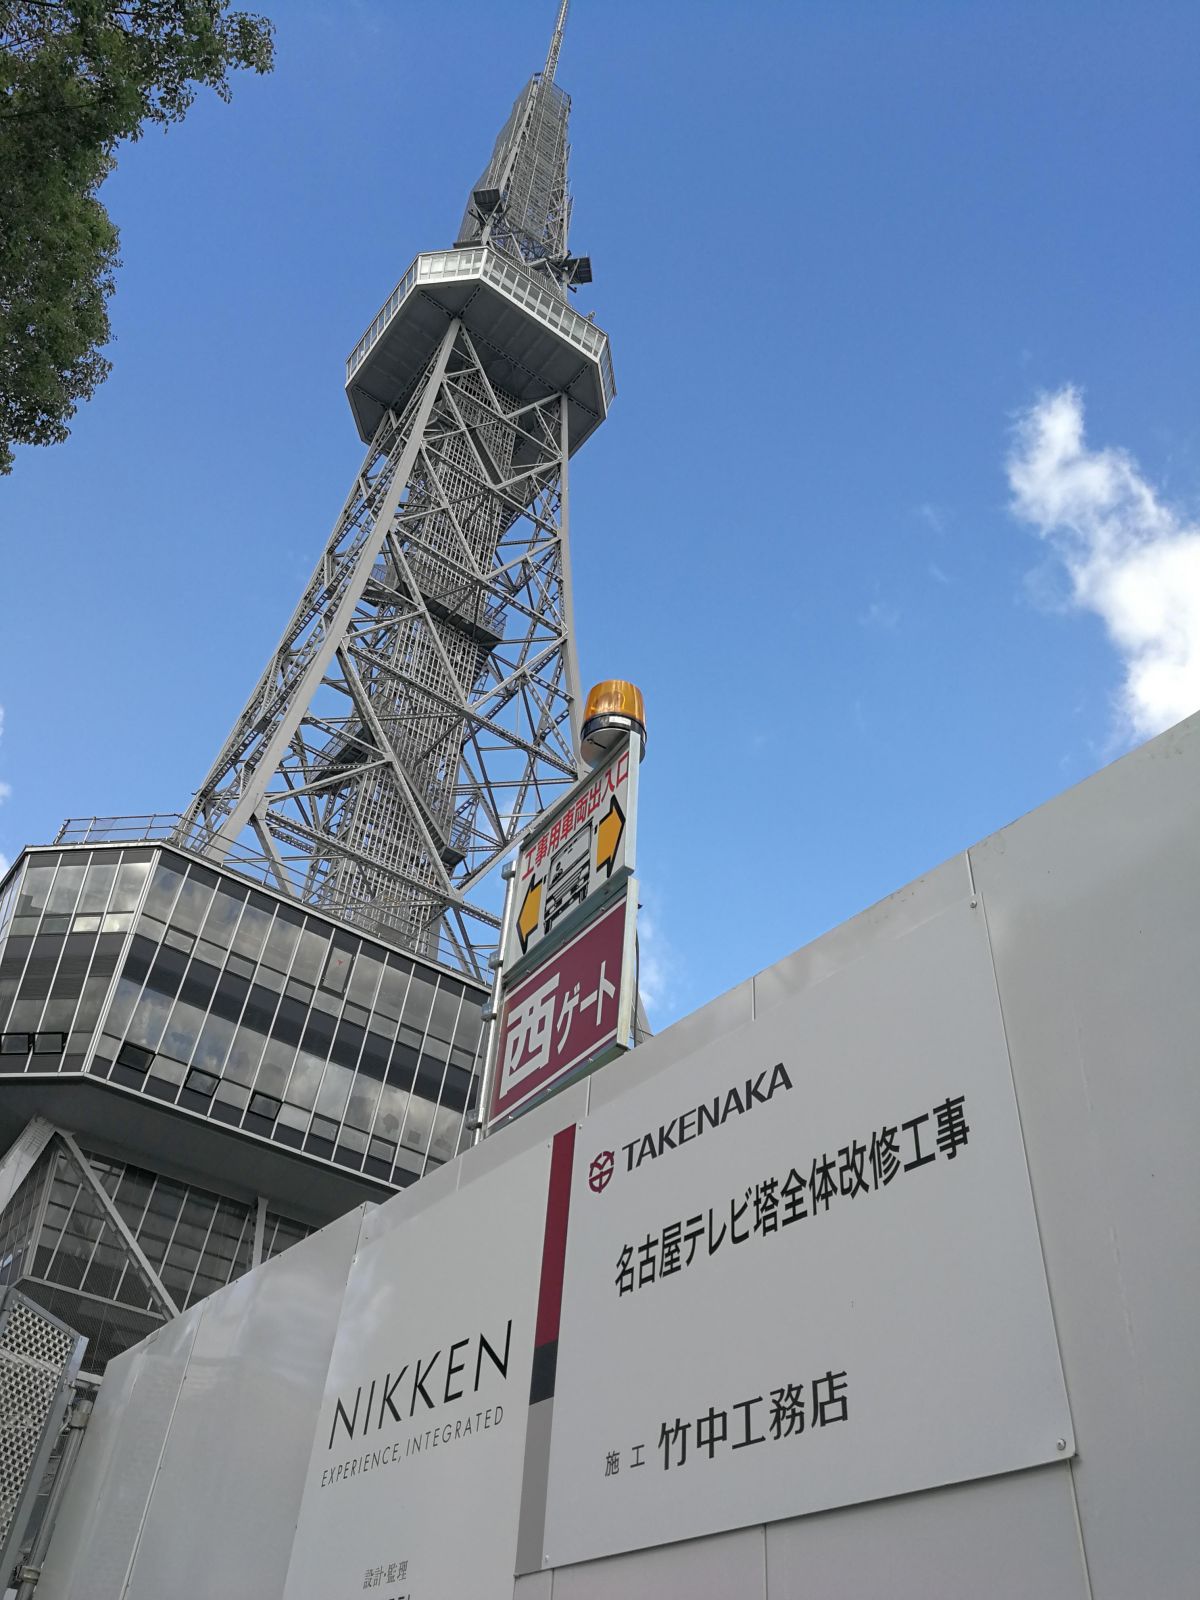 名古屋テレビ塔全体改修工事